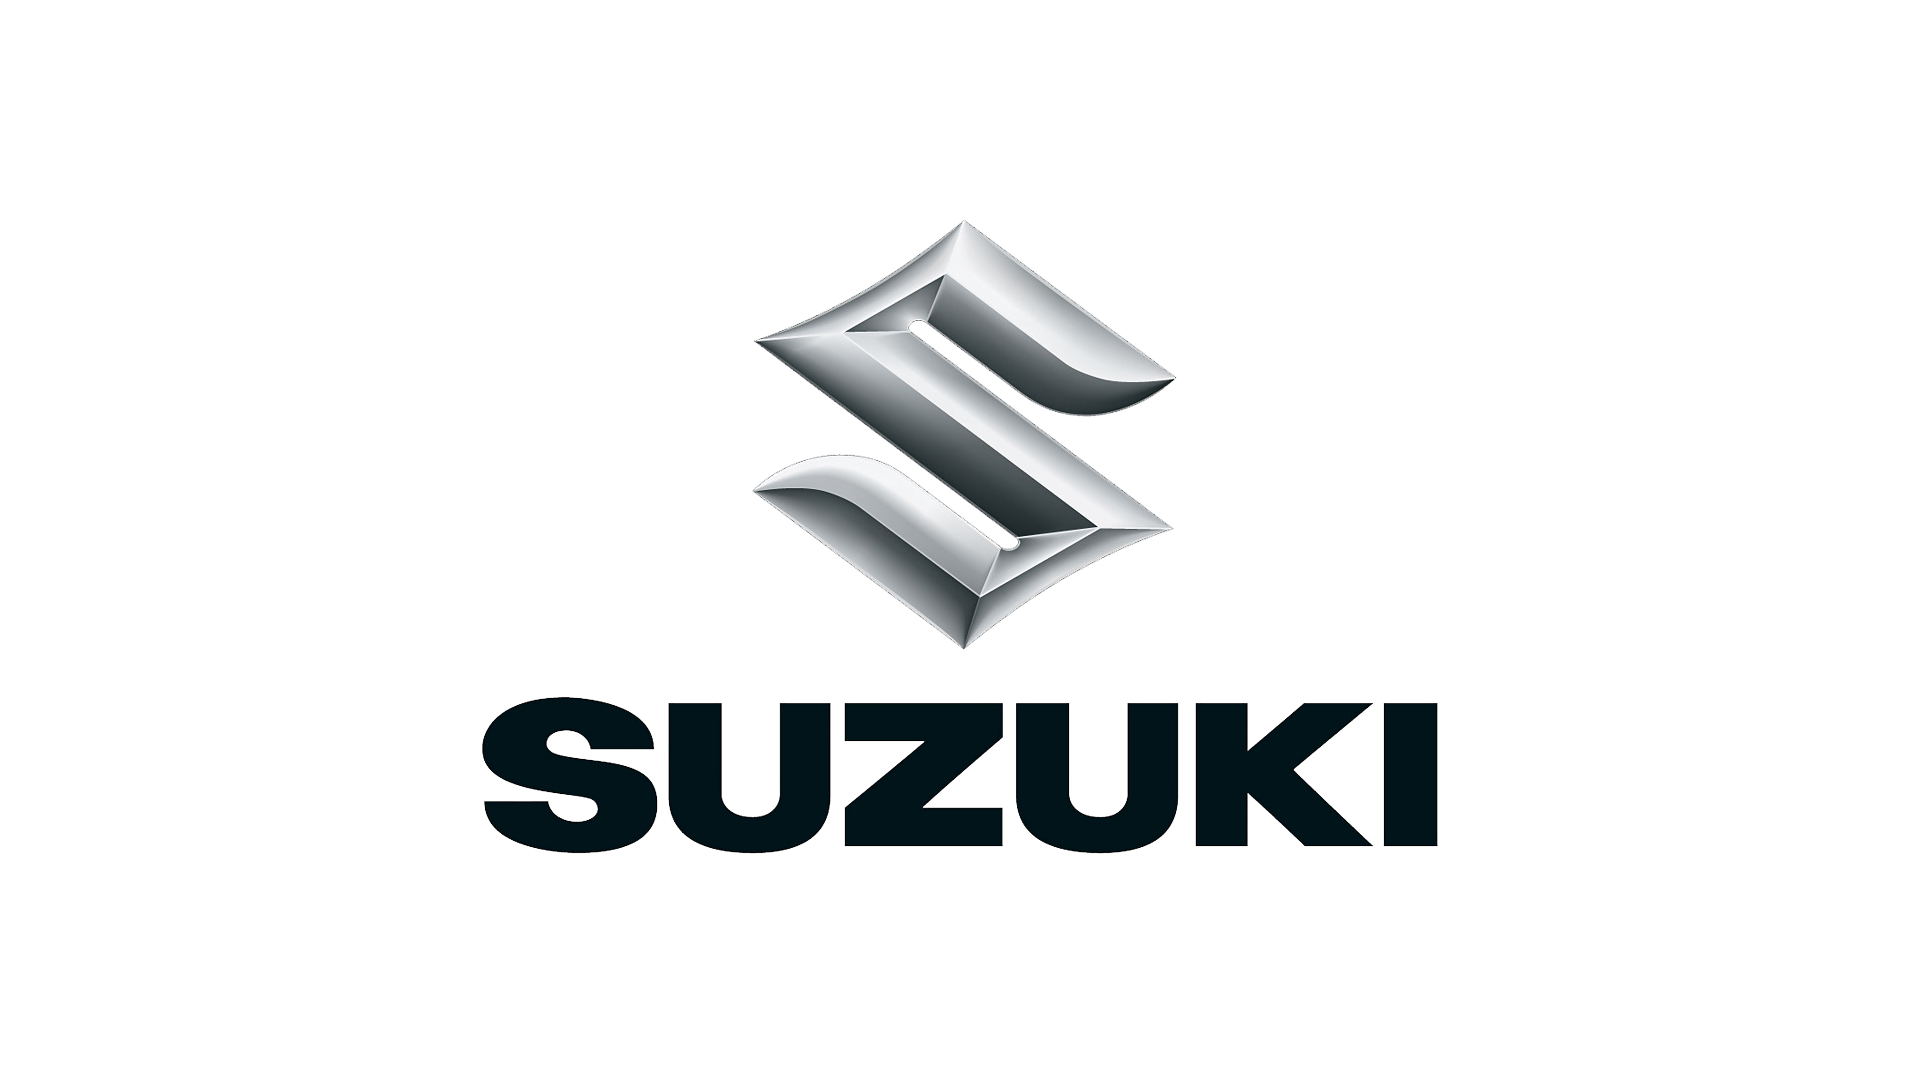 Suzuki HD PNG - 117698